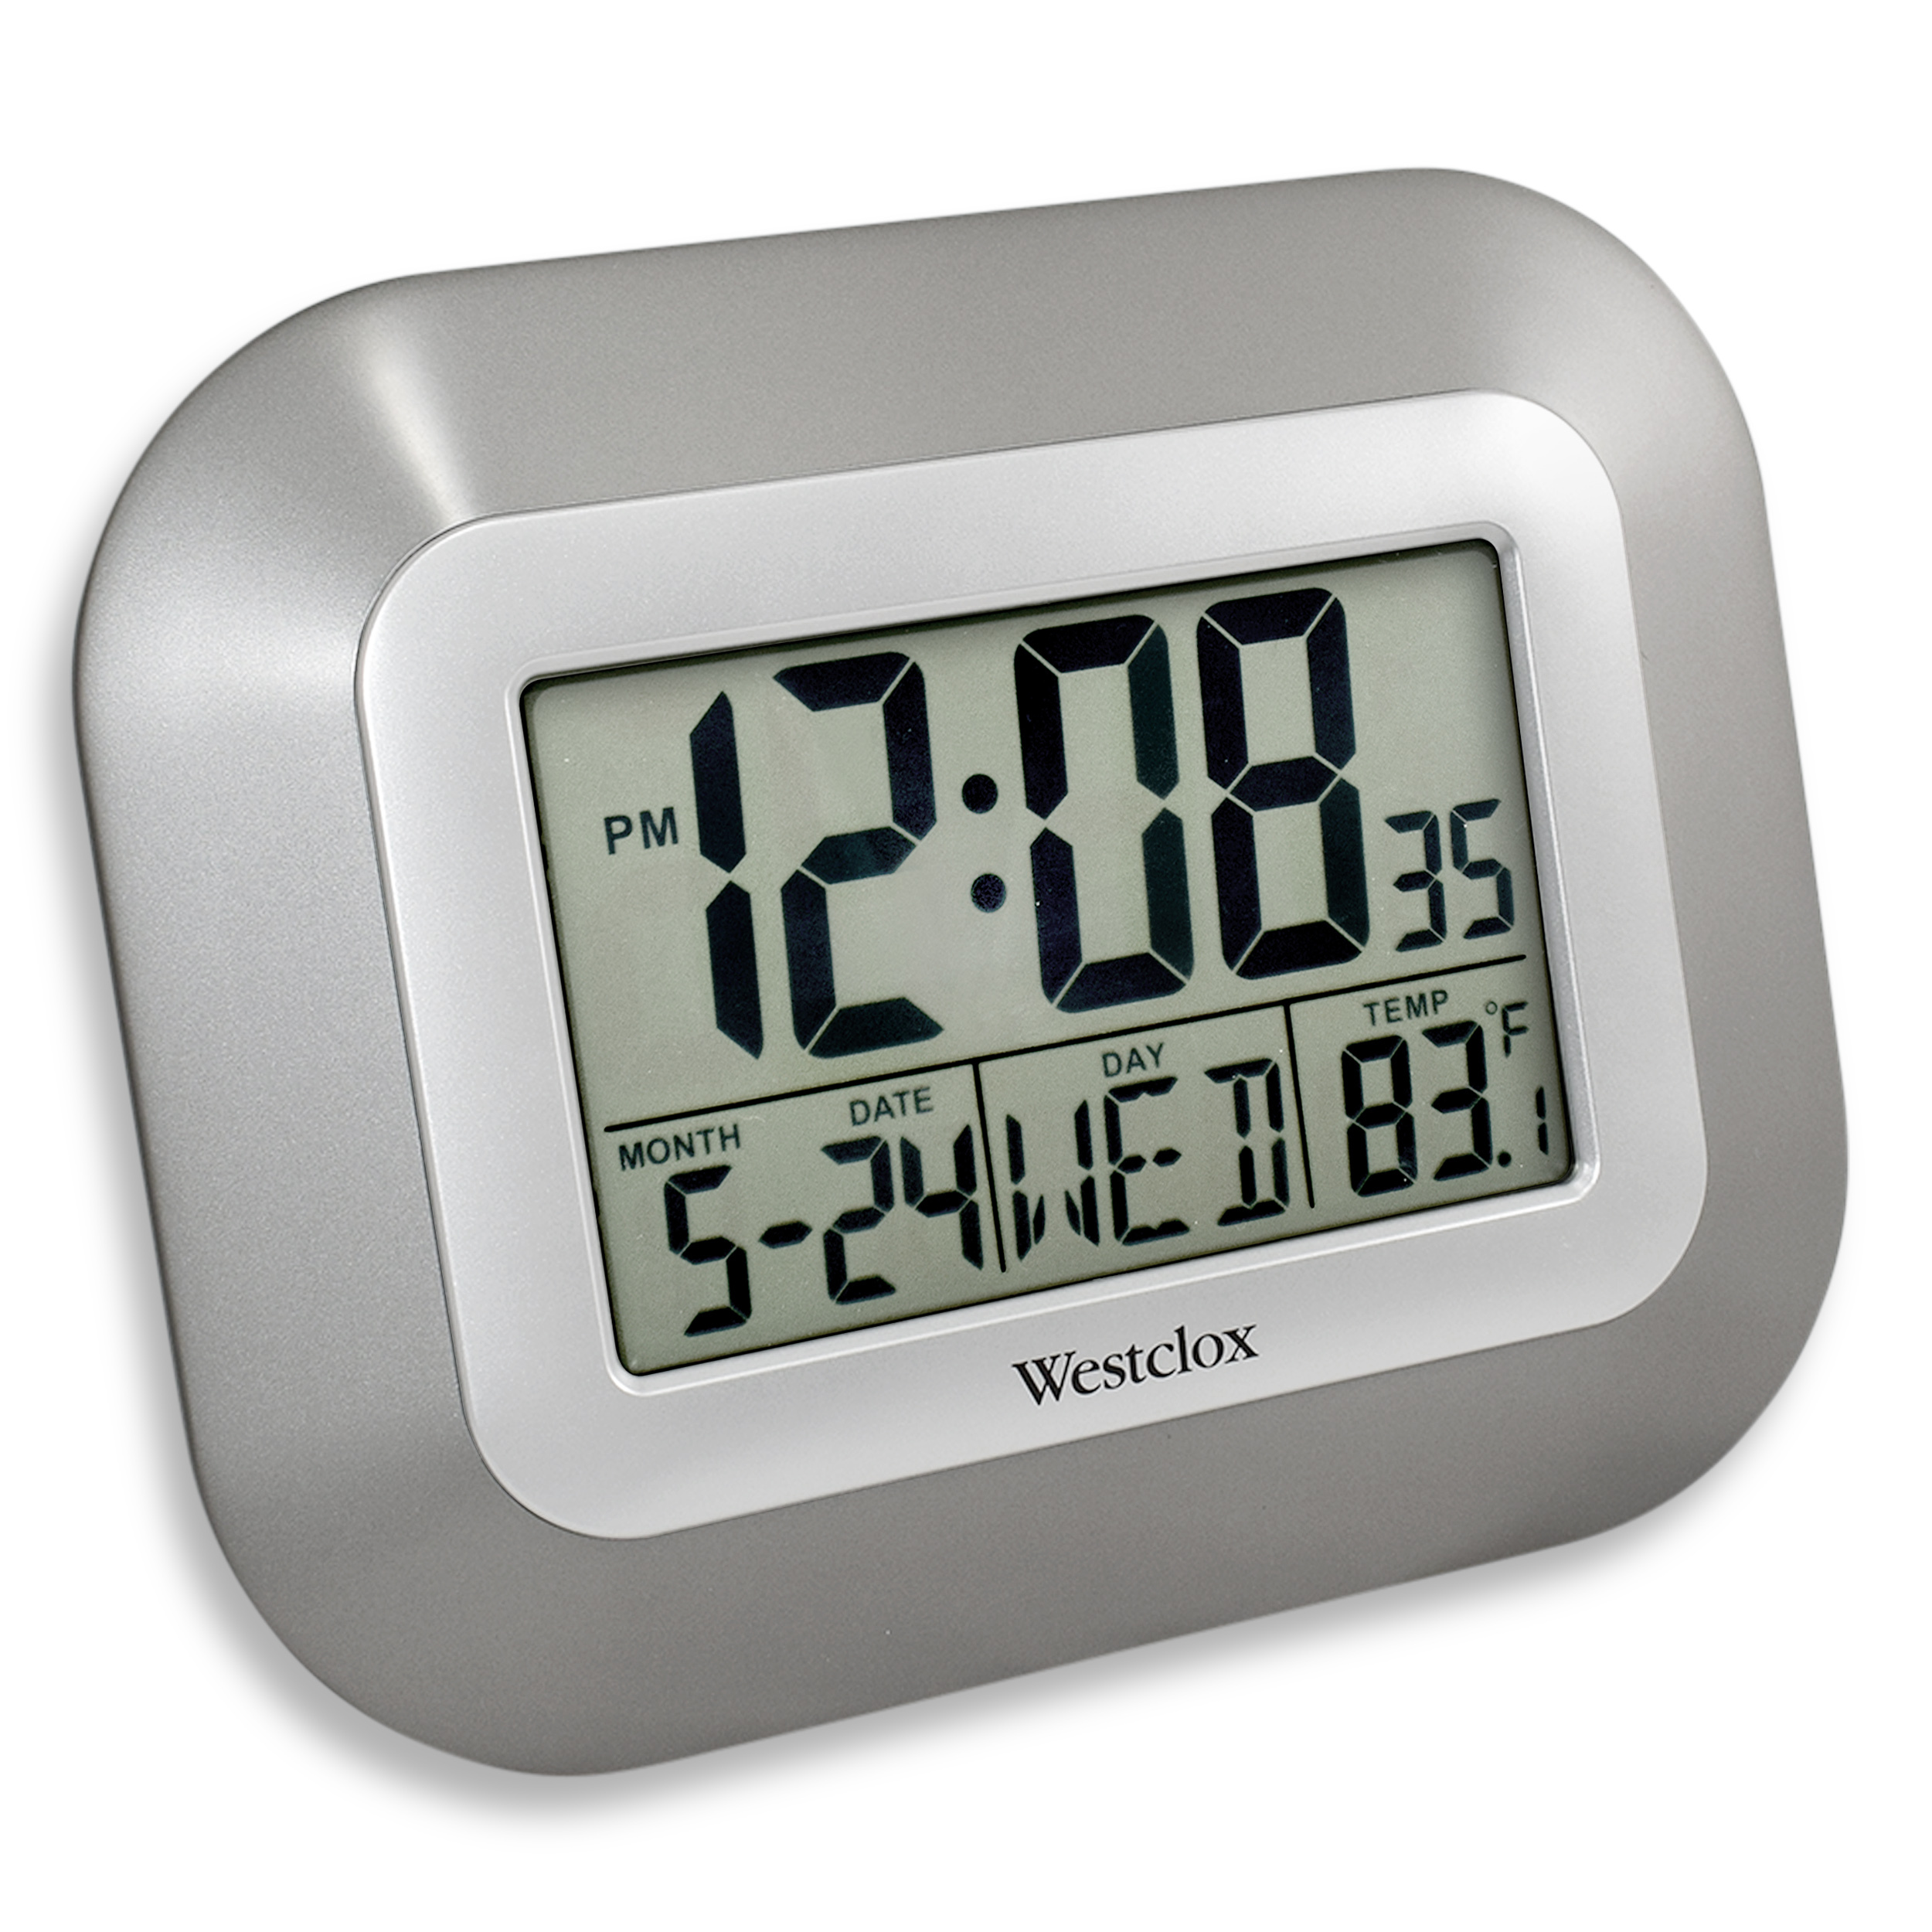 clk104 brand new Newcastle United bell alarm clock BNIP 